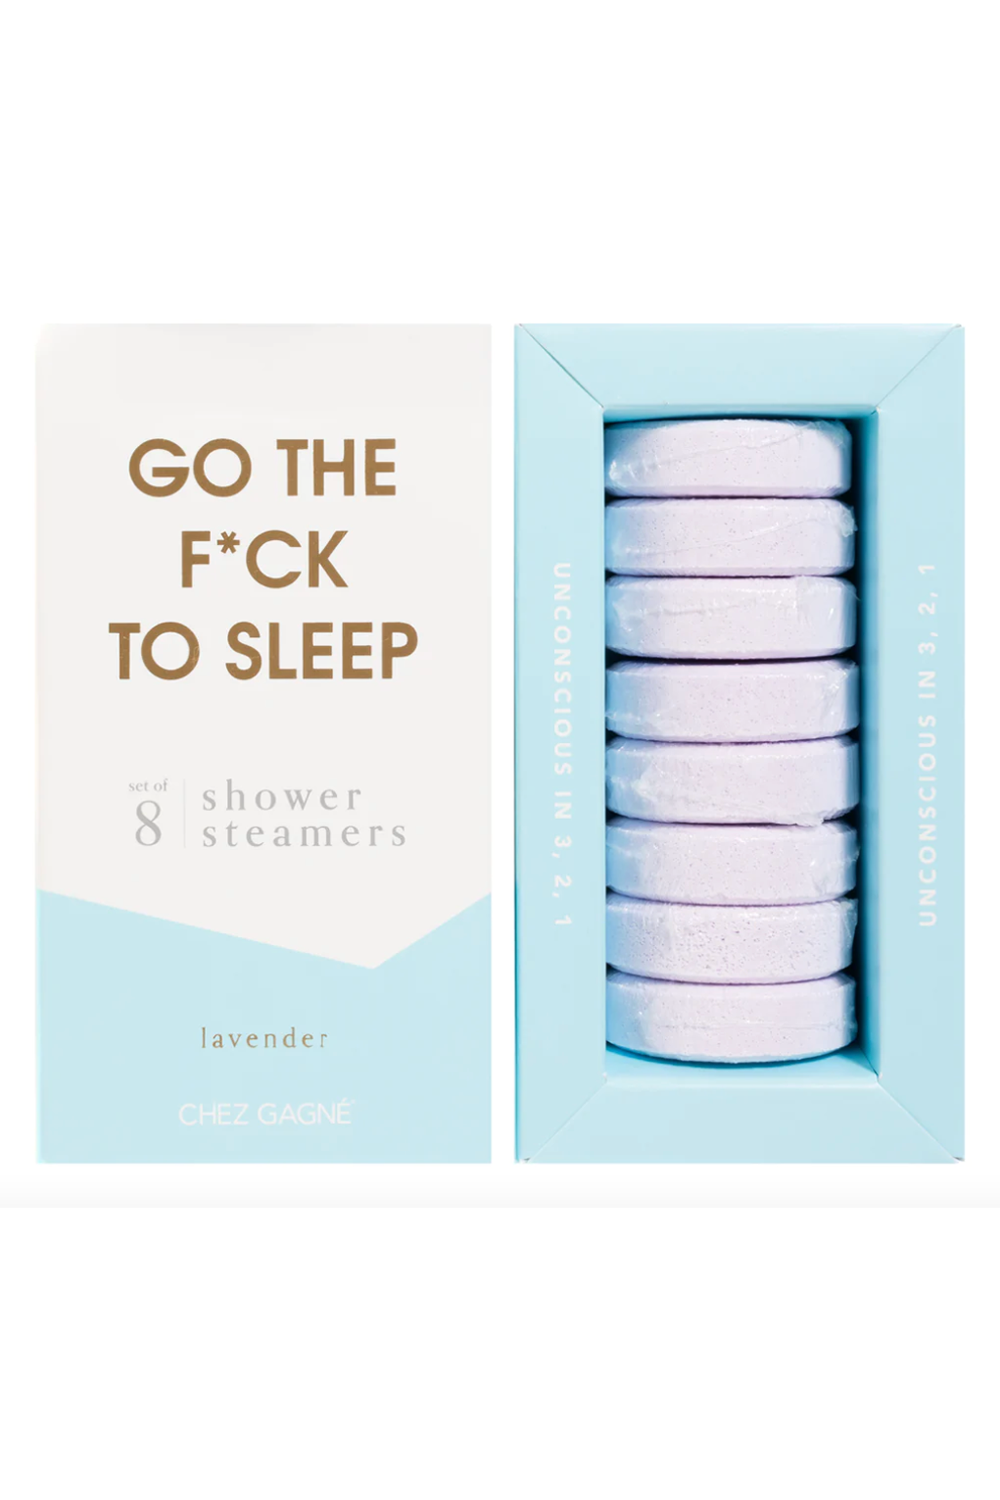 CG Shower Steamers - Go The F To Sleep